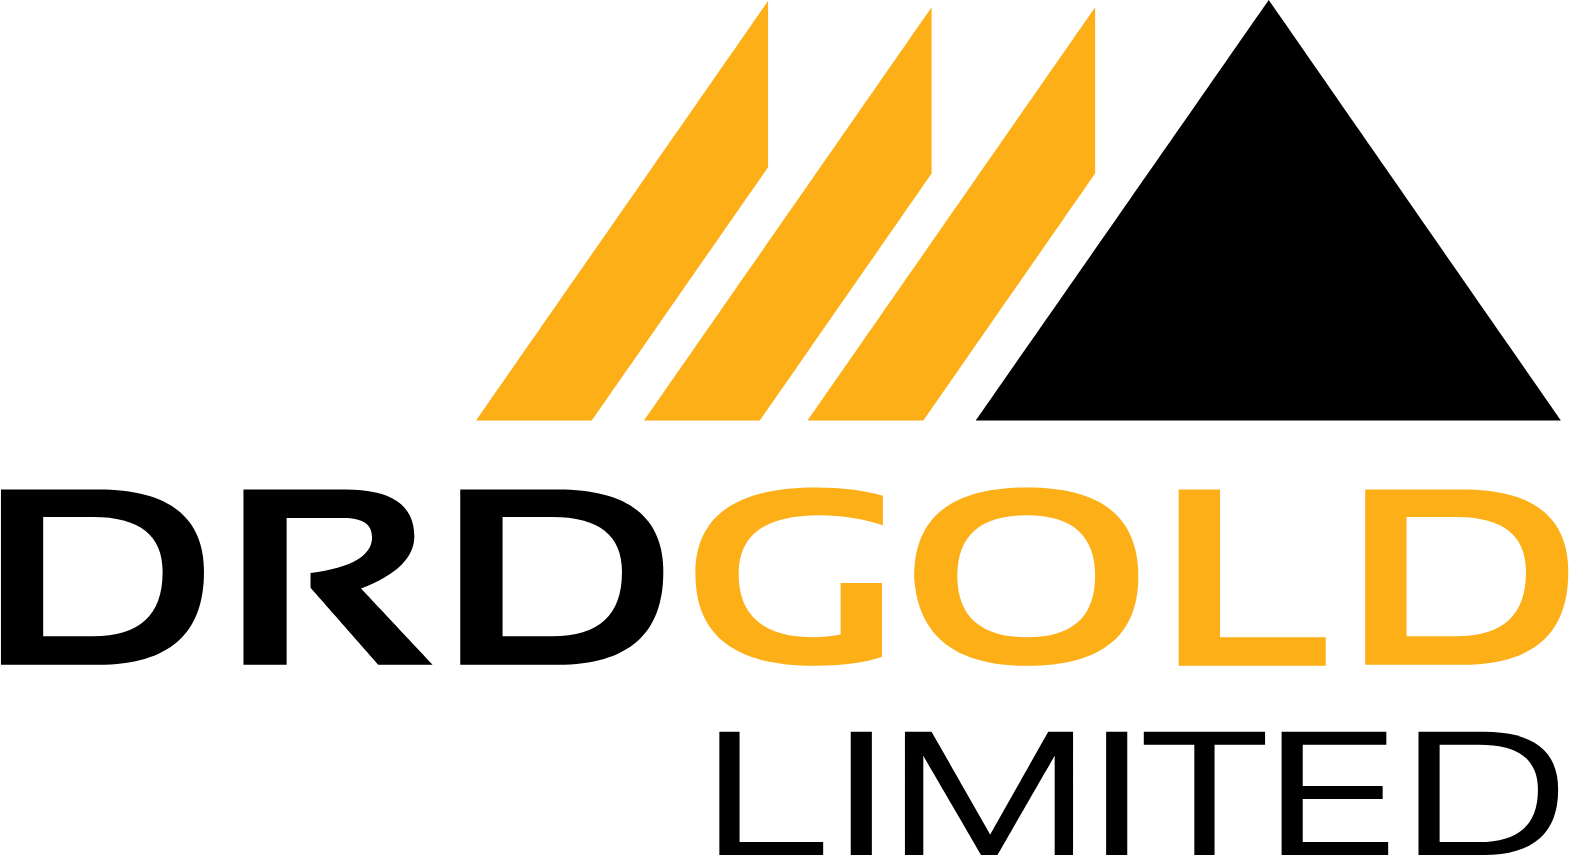 DRDGOLD logo large (transparent PNG)